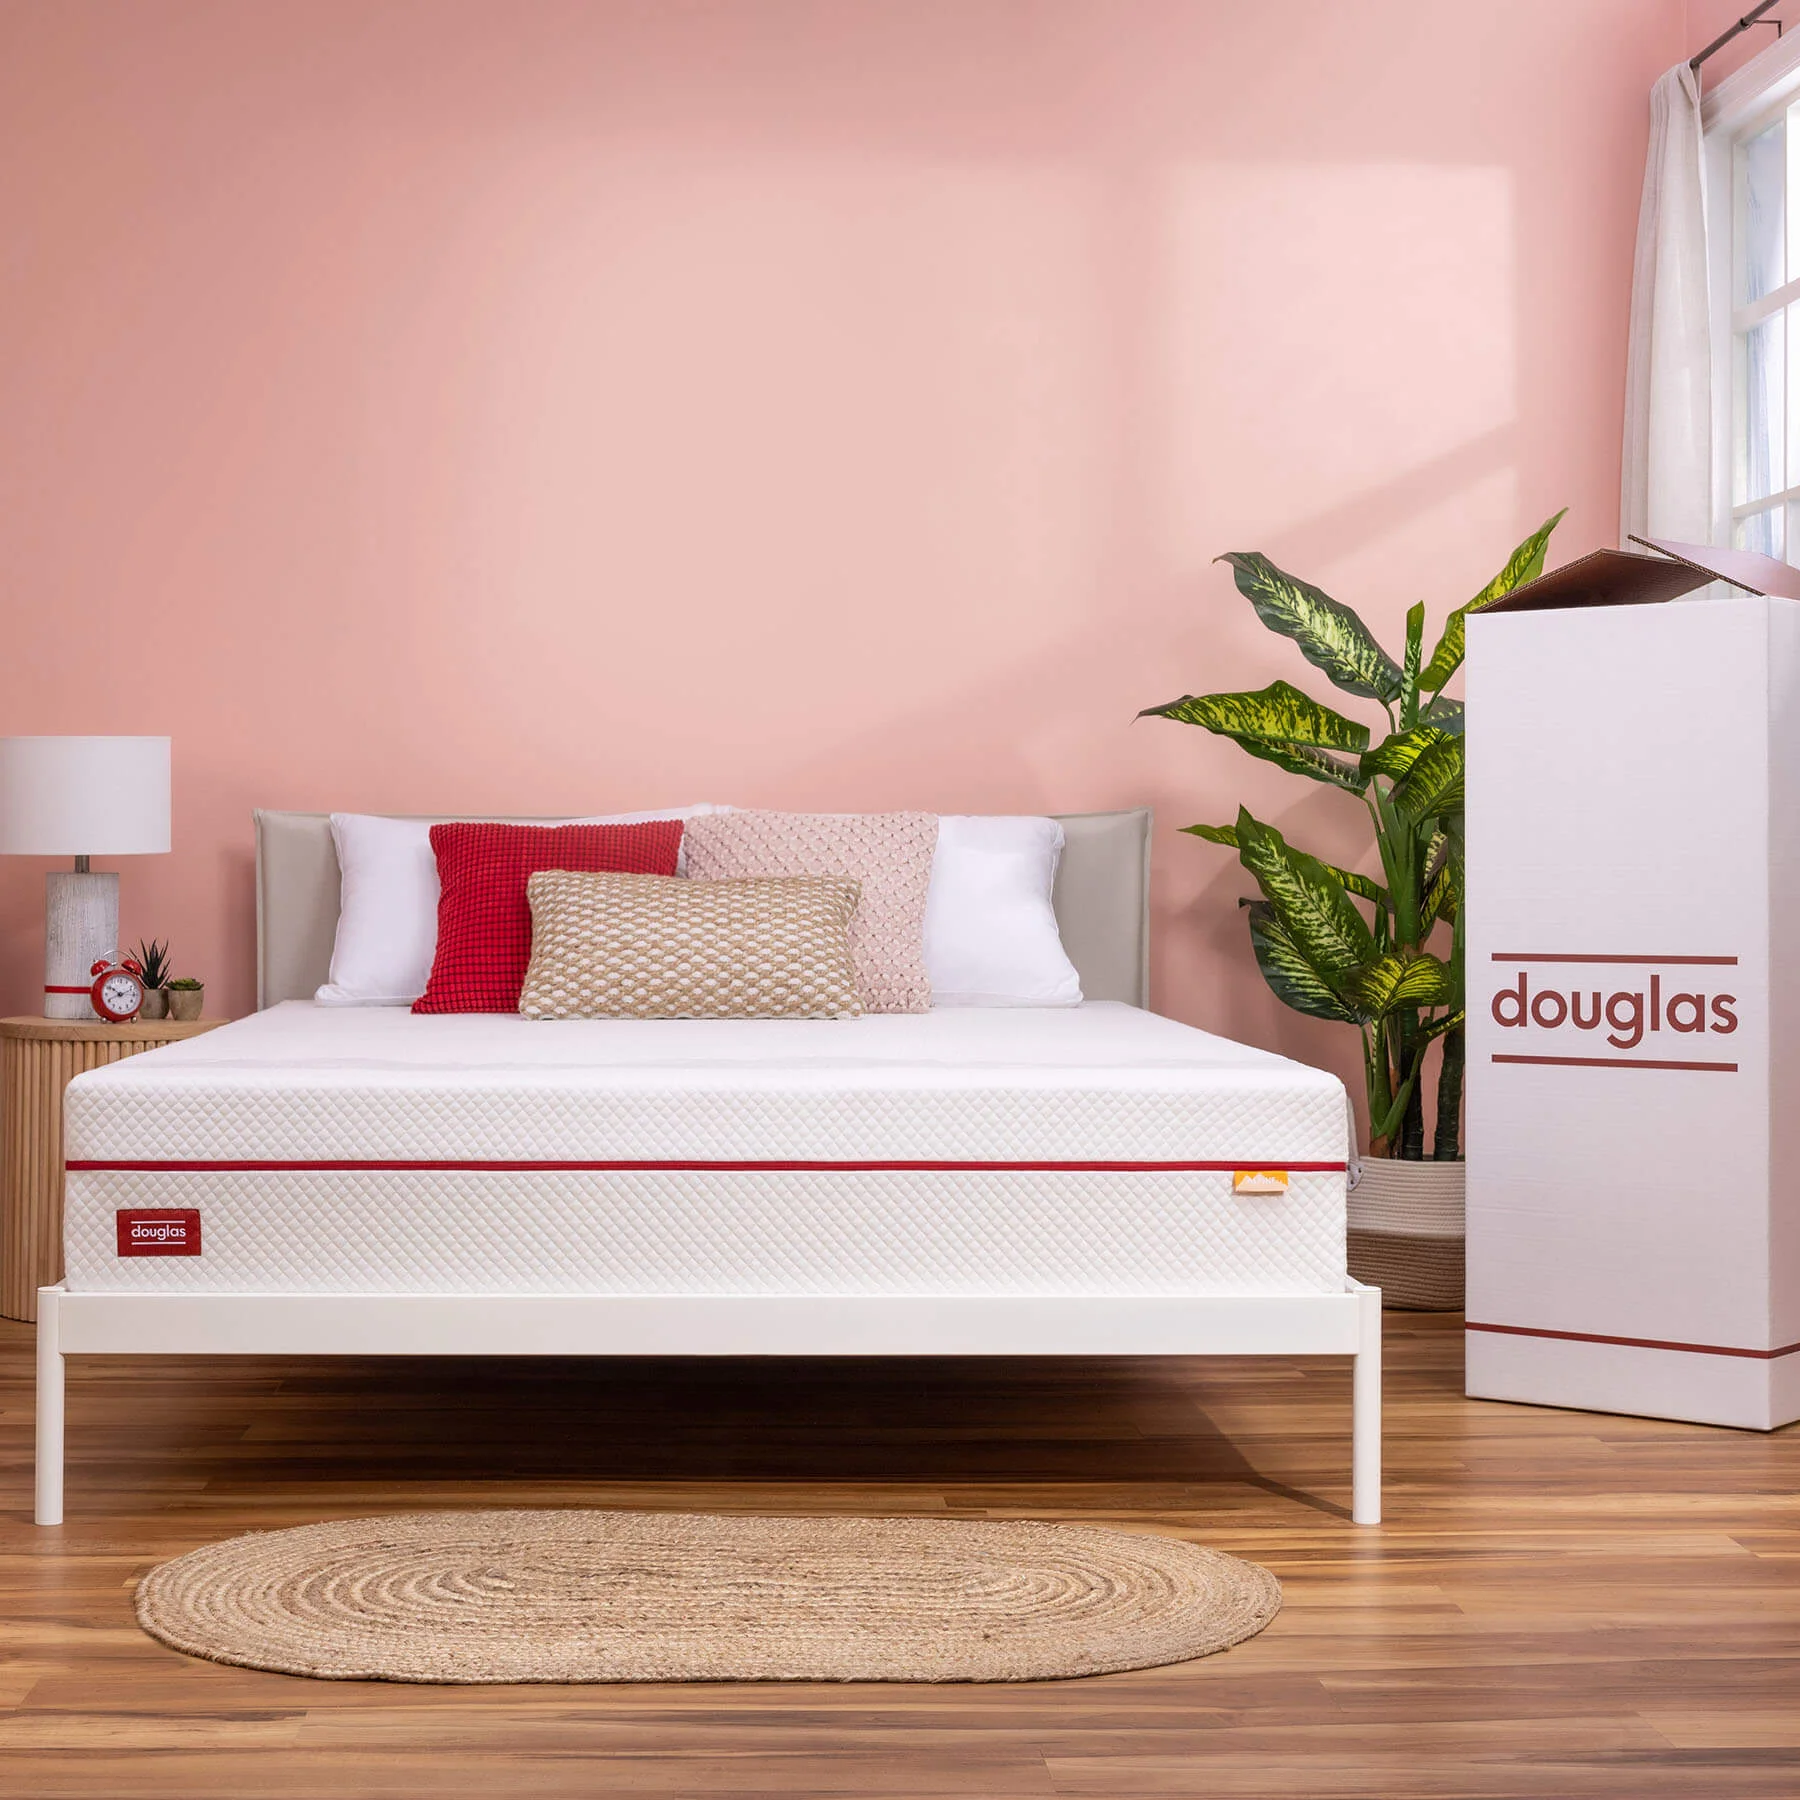 Douglas Alpine mattress